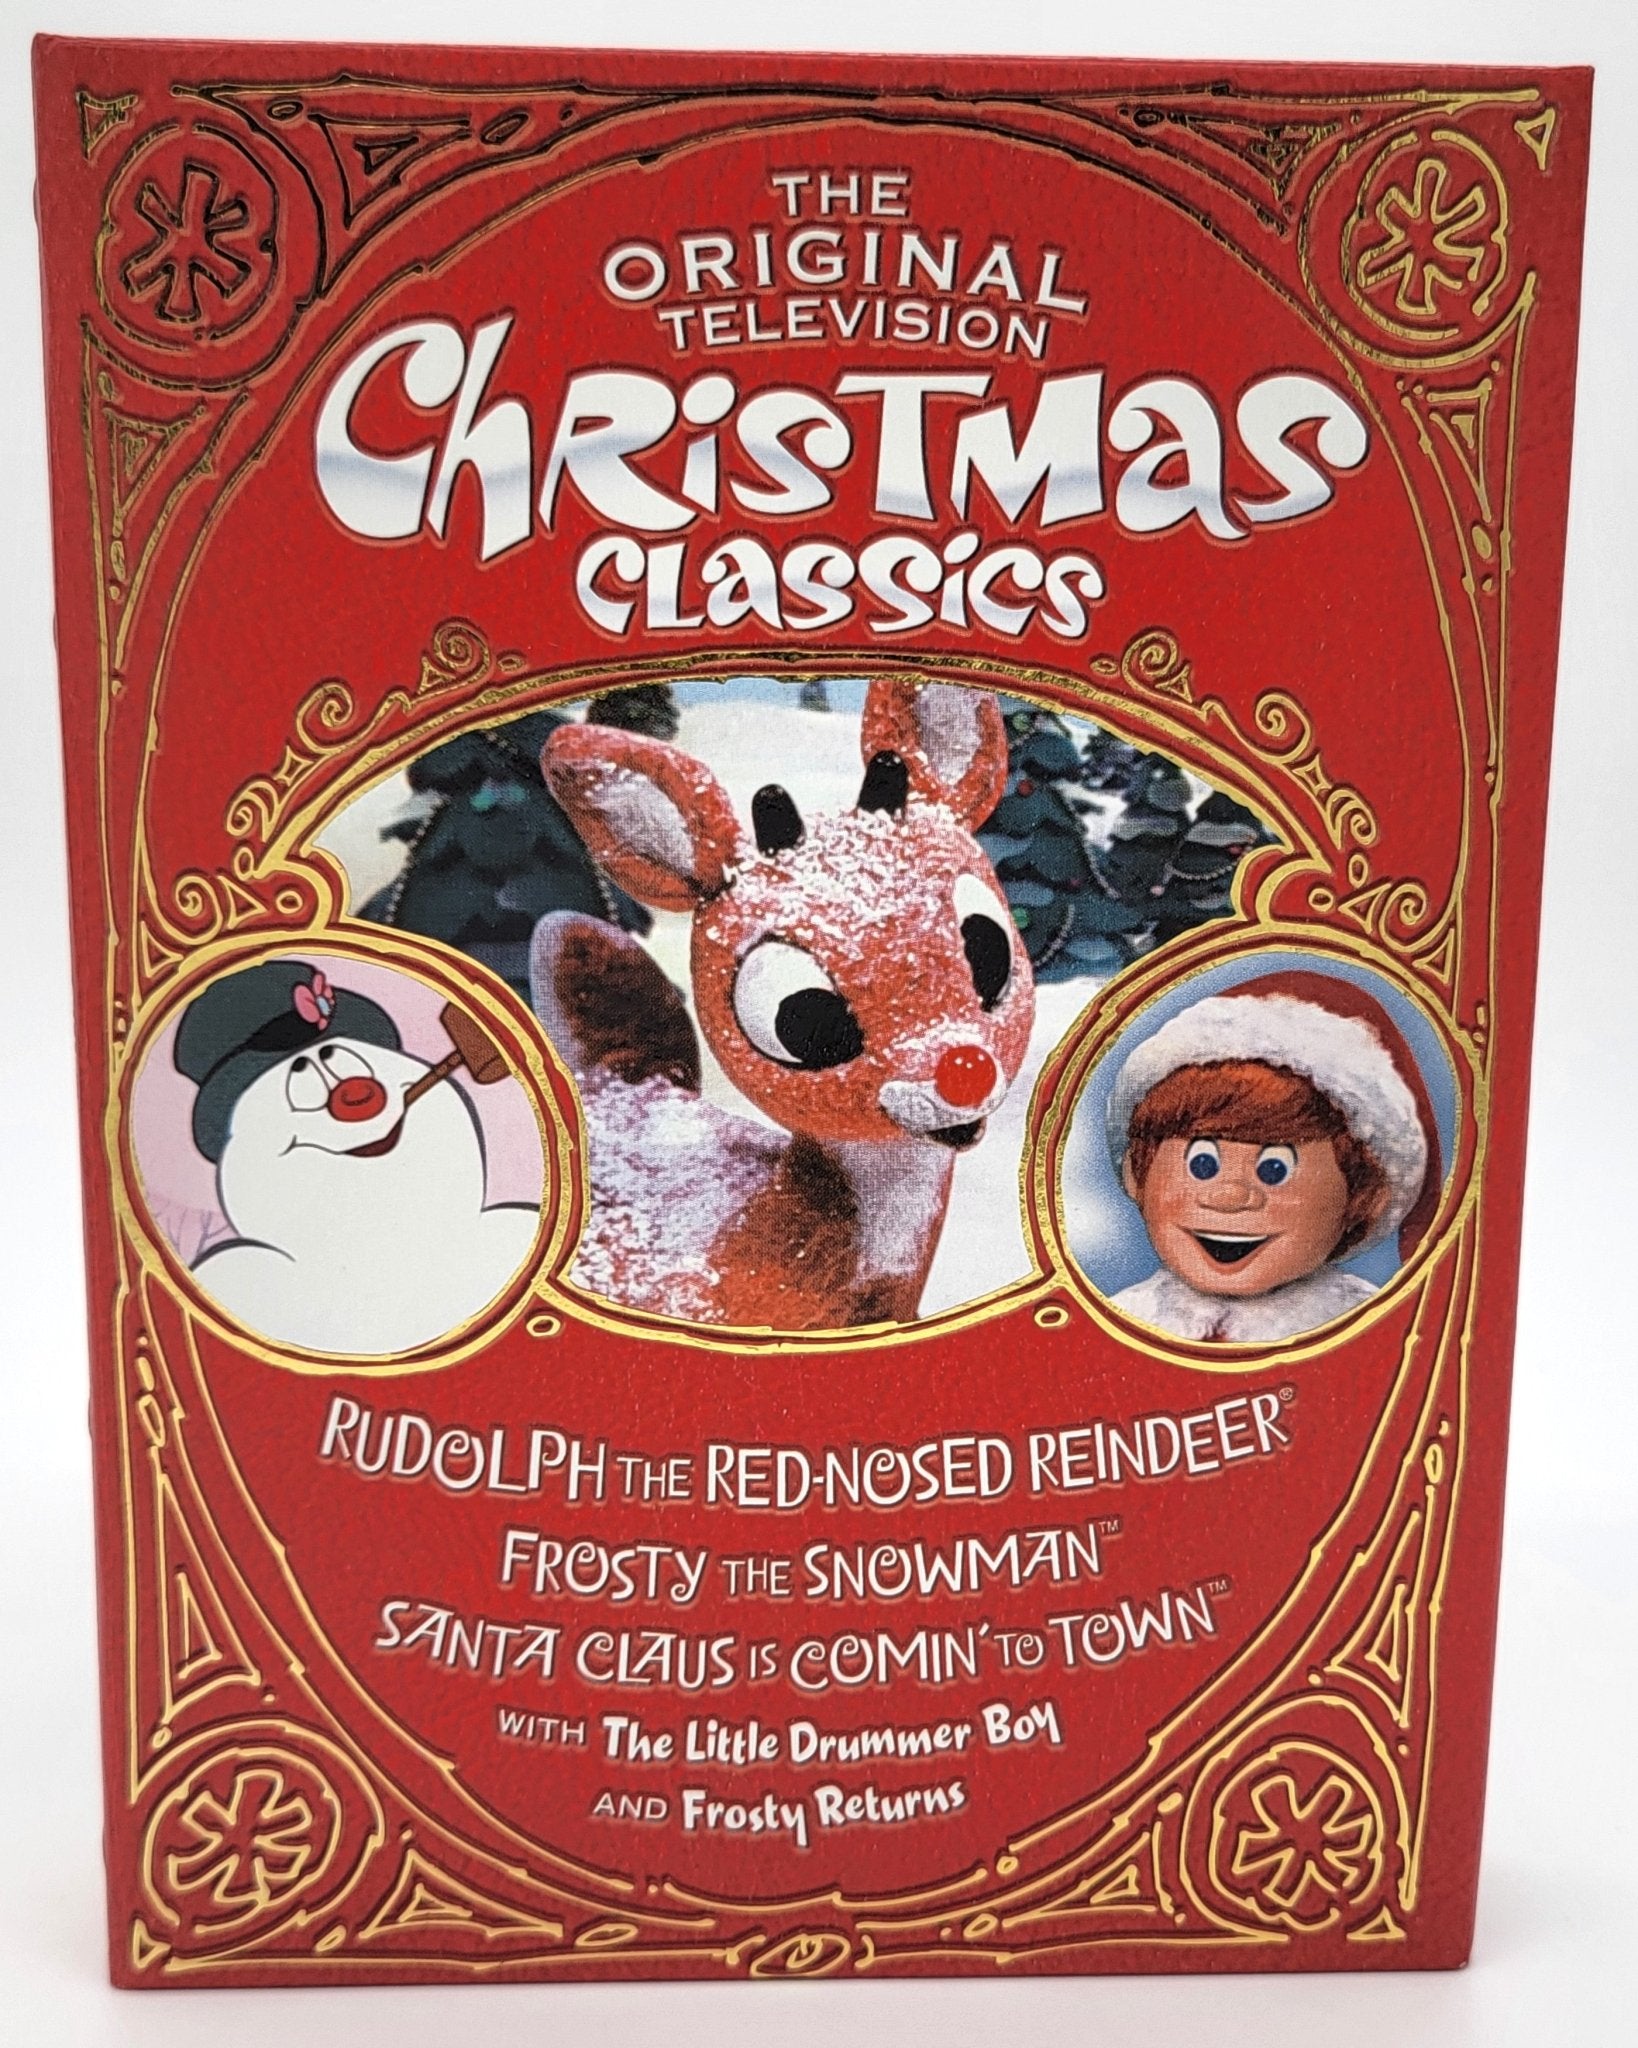 Classic Media - Christmas Classics | DVD | The Original Television Christmas Classic - DVD - Steady Bunny Shop